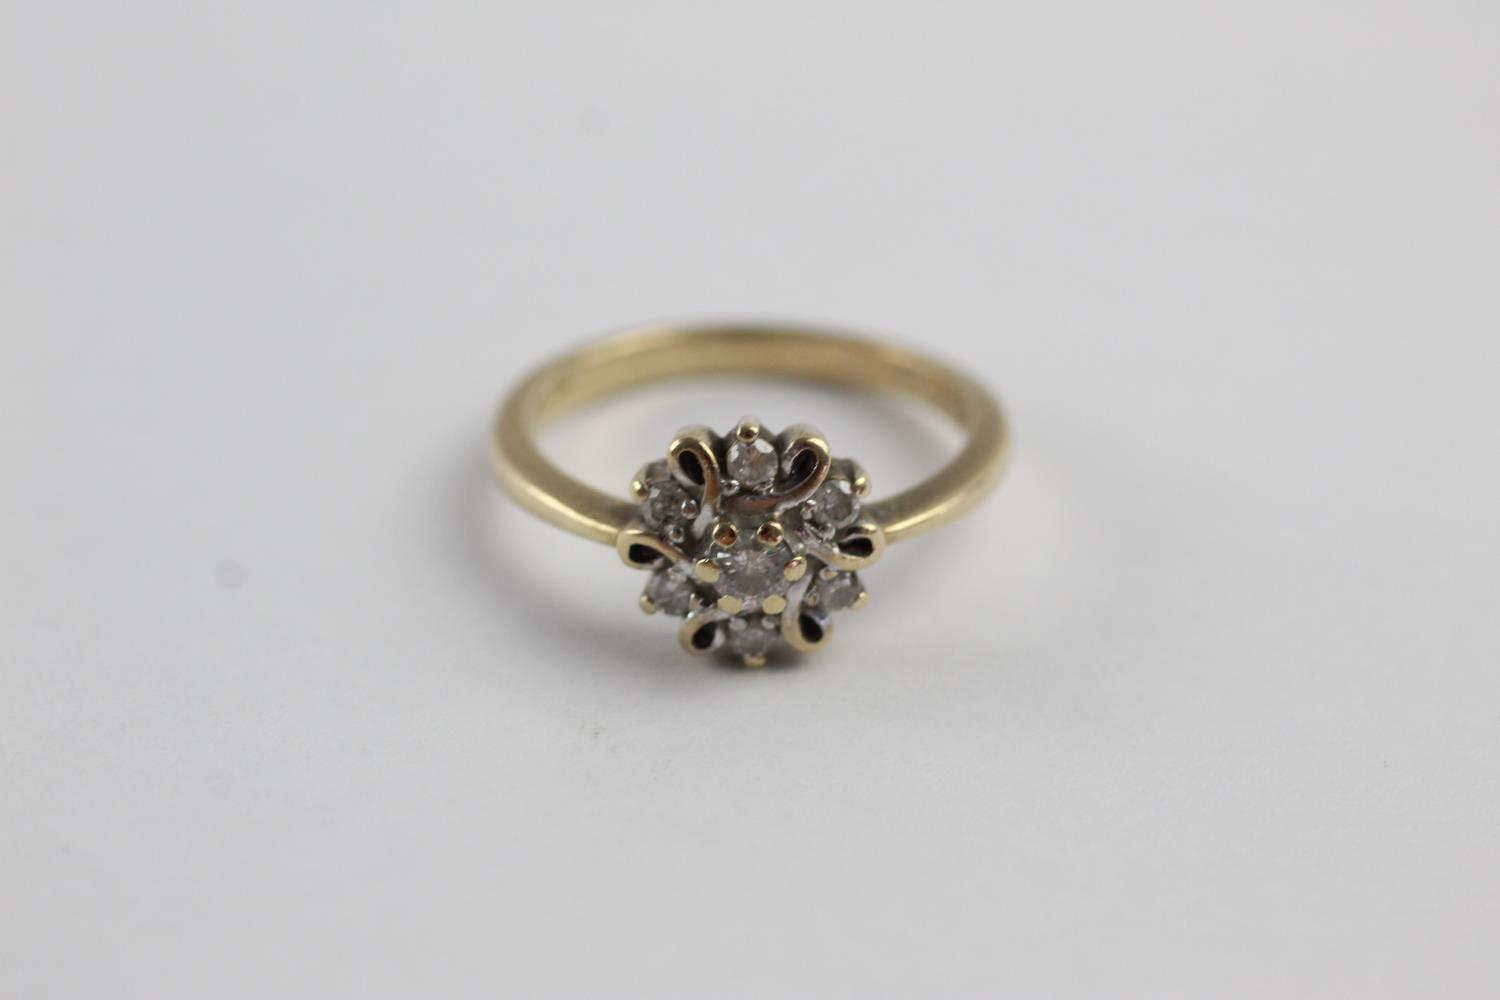 9ct gold diamond ring (2.7g) size N